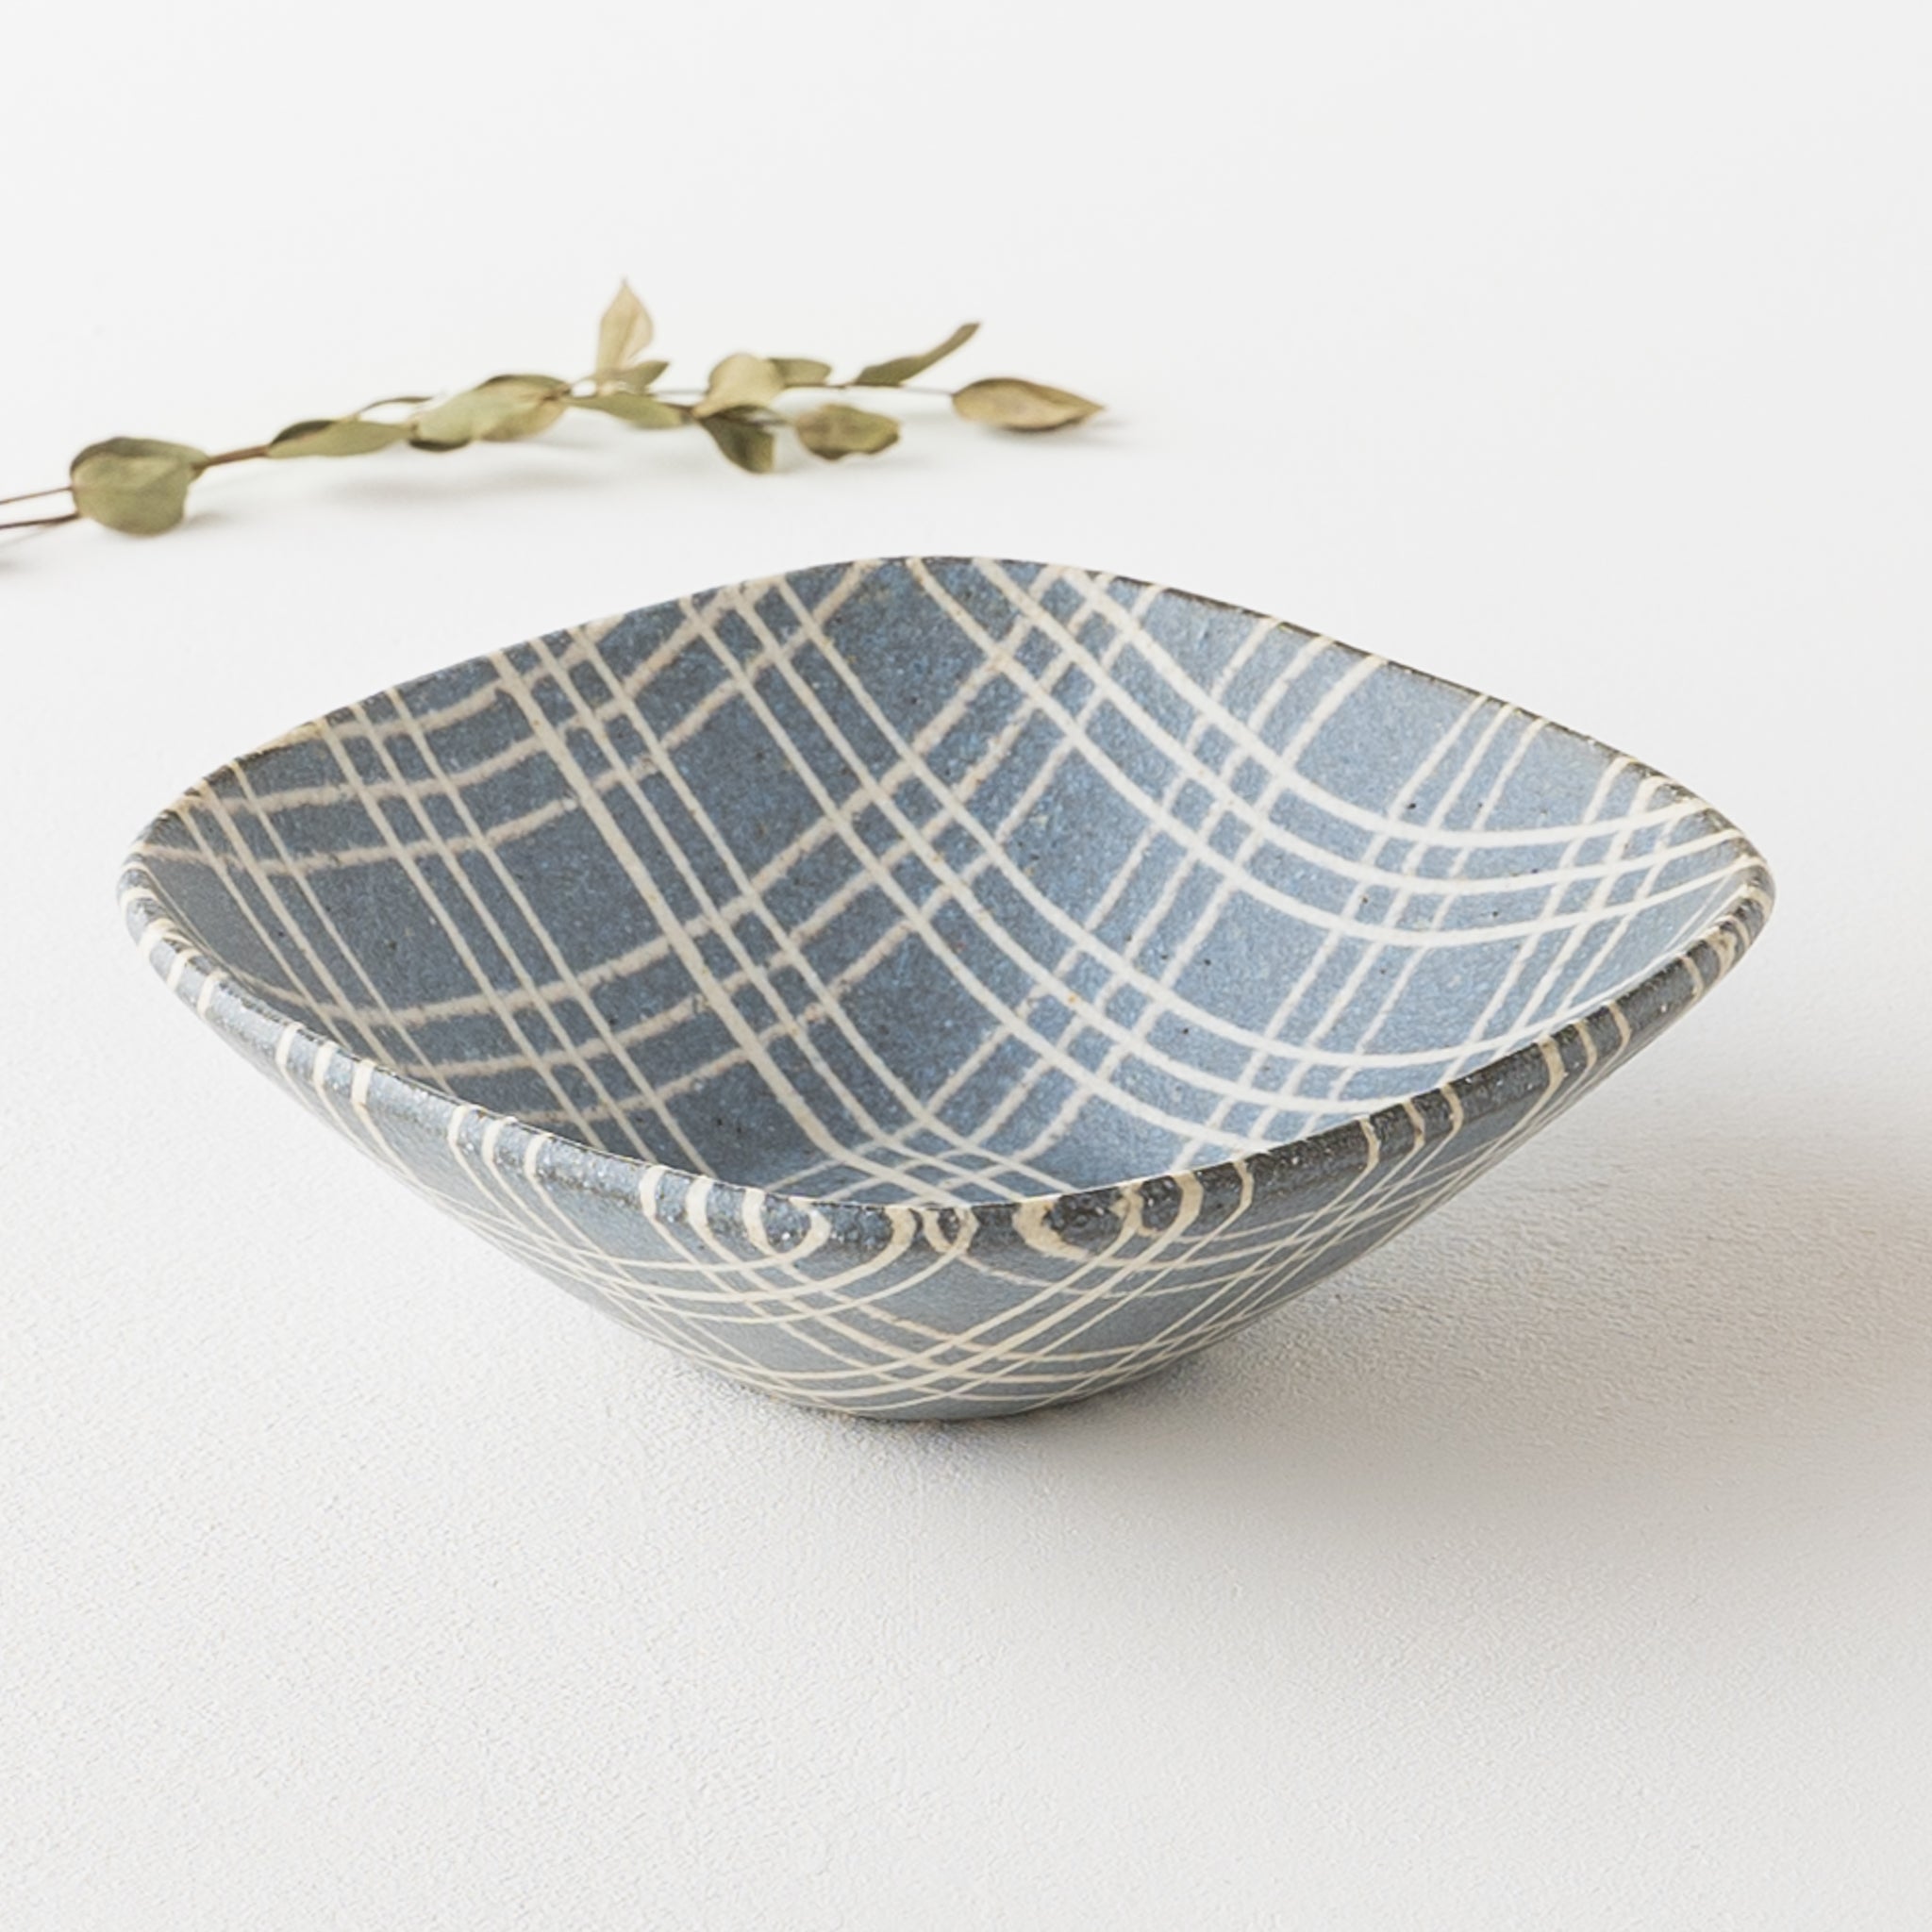 Hanako Sakashita's corner bowl with a stylish kneaded pattern